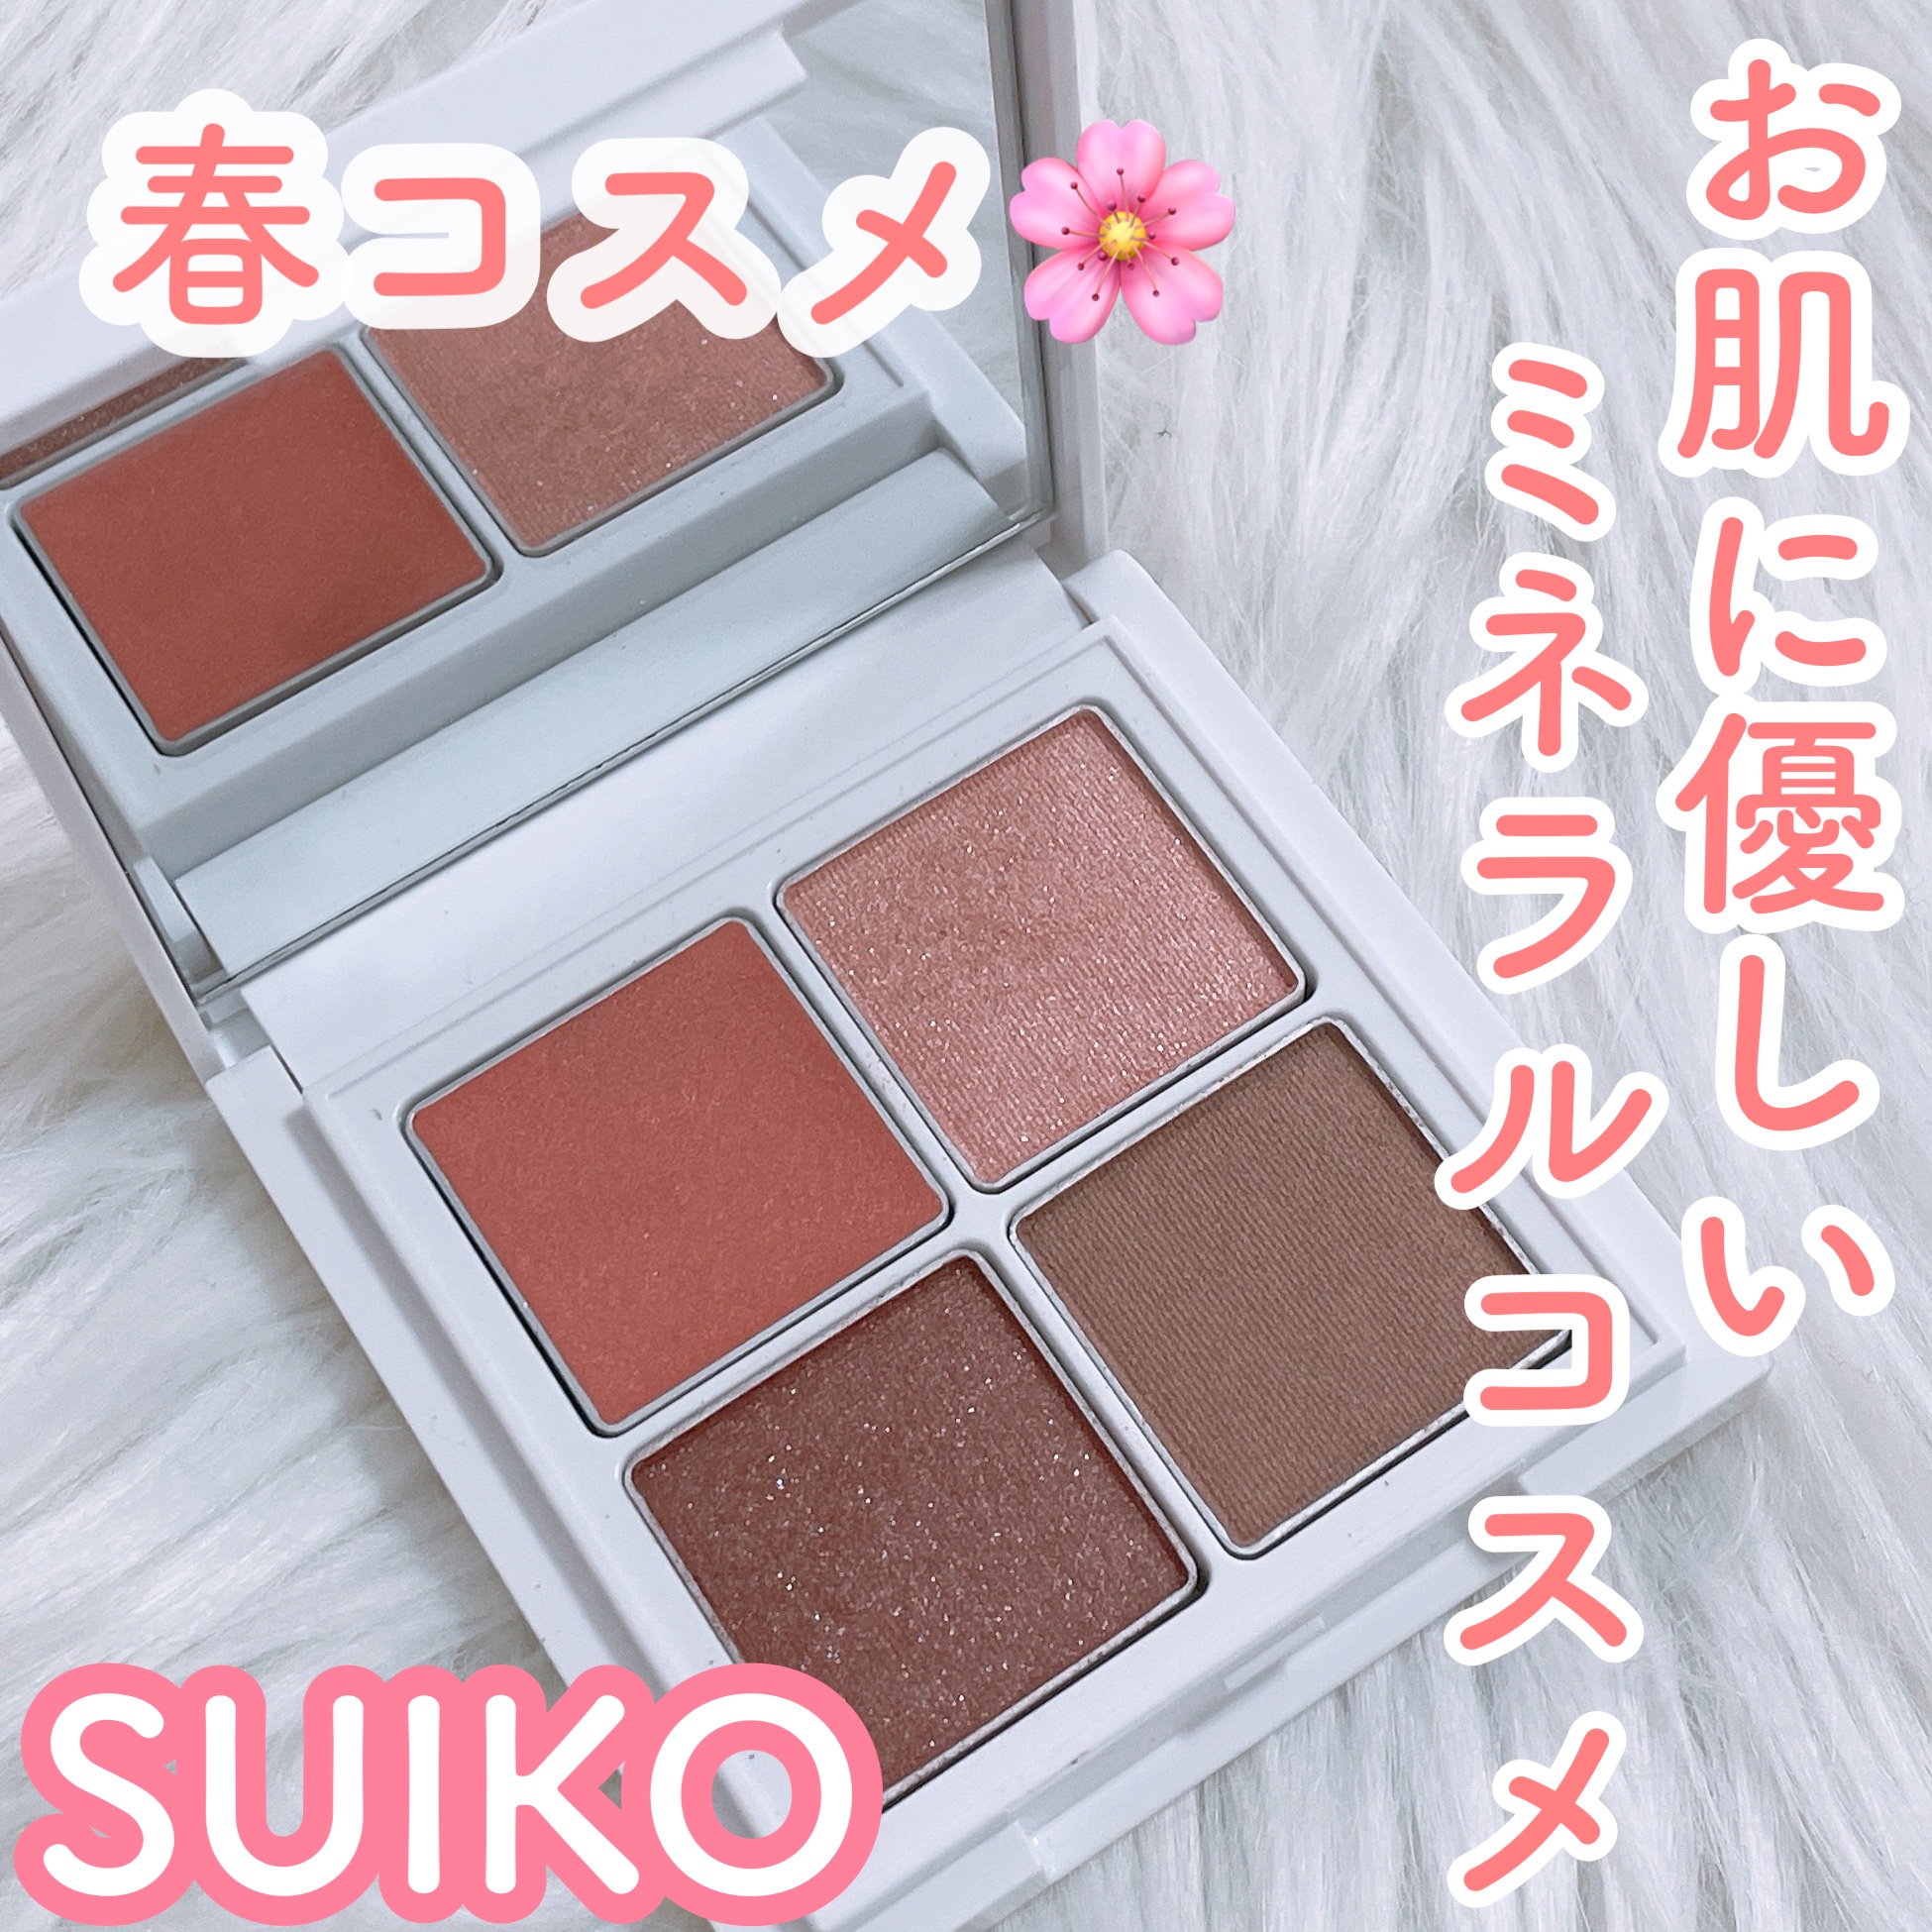 SUIKO HATSUCURE / SUIKO HC ミネラルマルチアイパレットの公式商品